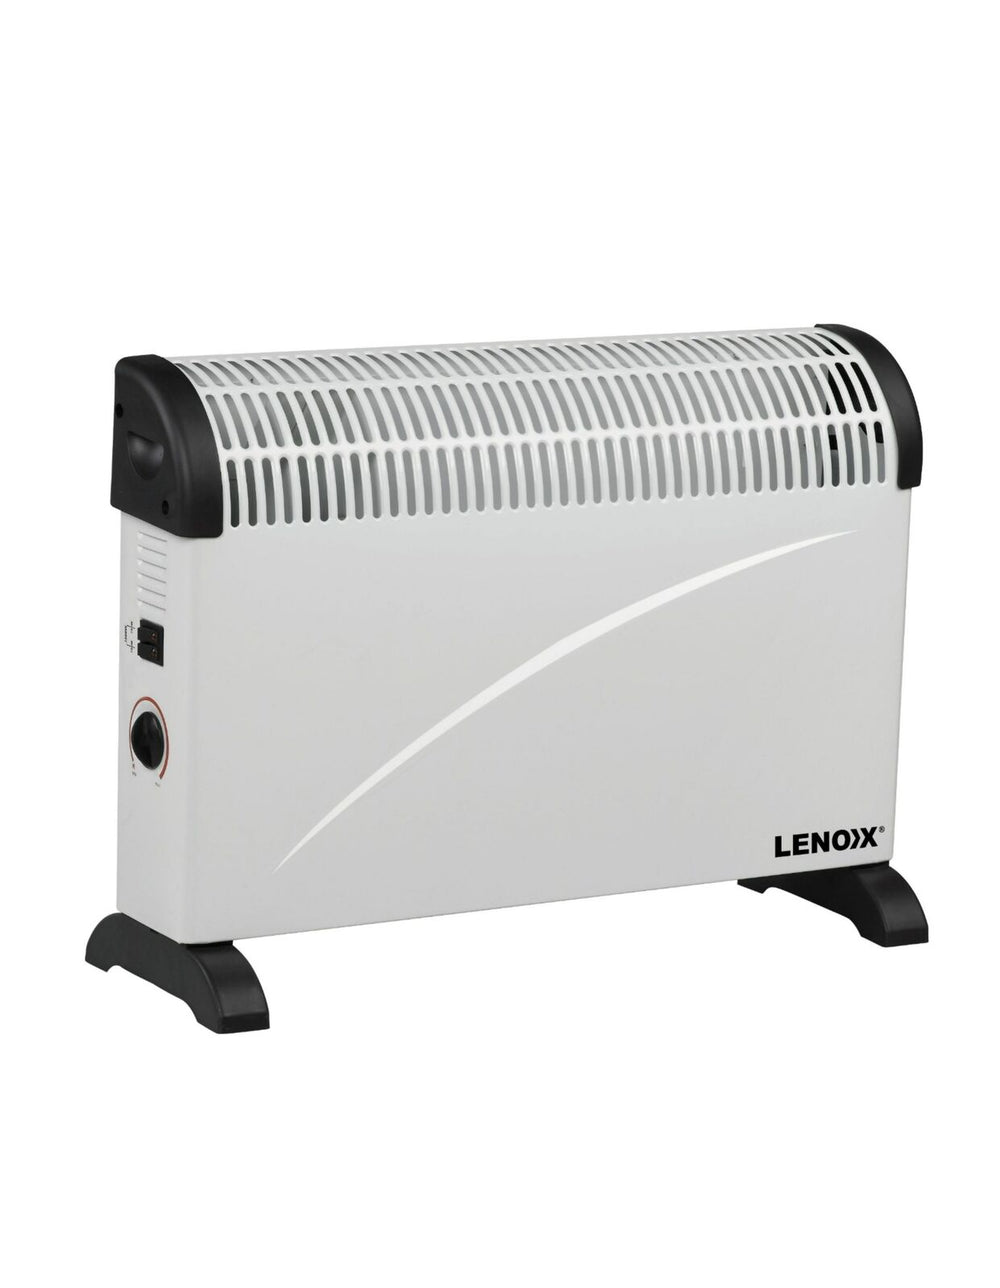 Lenoxx Portable Convector Heater 2000W, 3 Heat Settings